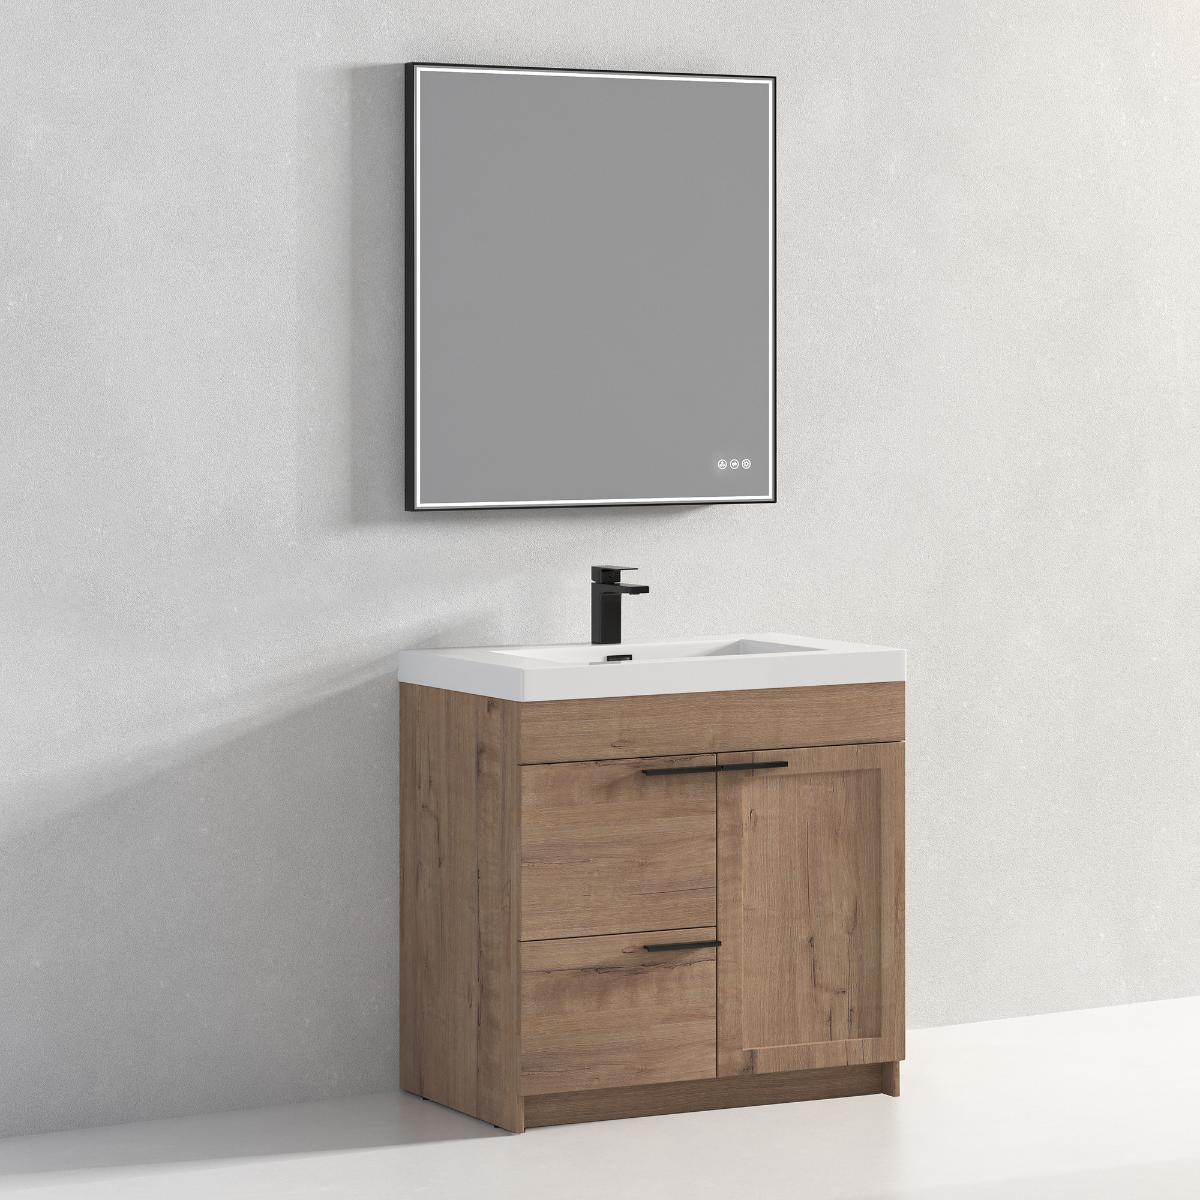 Hanover 36" Bathroom Vanity  #size_36"  #color_classic oak